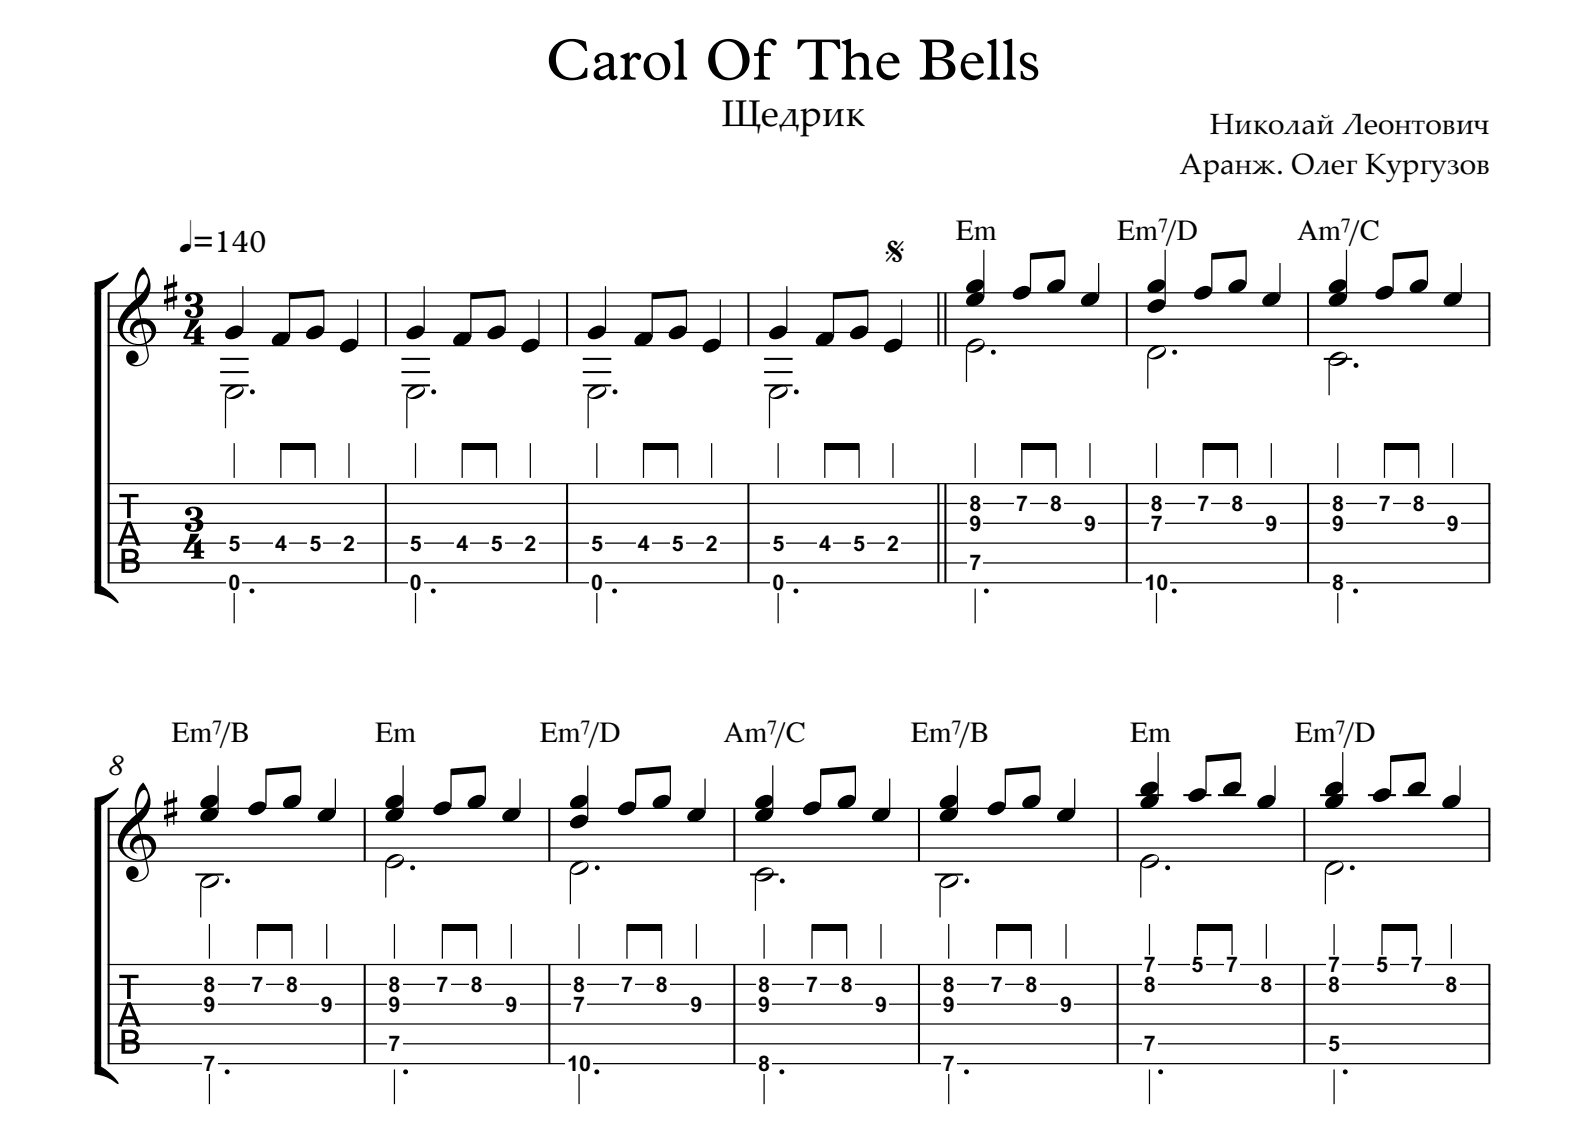 Carol of the bells ноты для фортепиано. Carol of the Bells Ноты и табы. Песня Carol of the Bells. Самая низкая Нота. Ноты для гитары саундтреки.